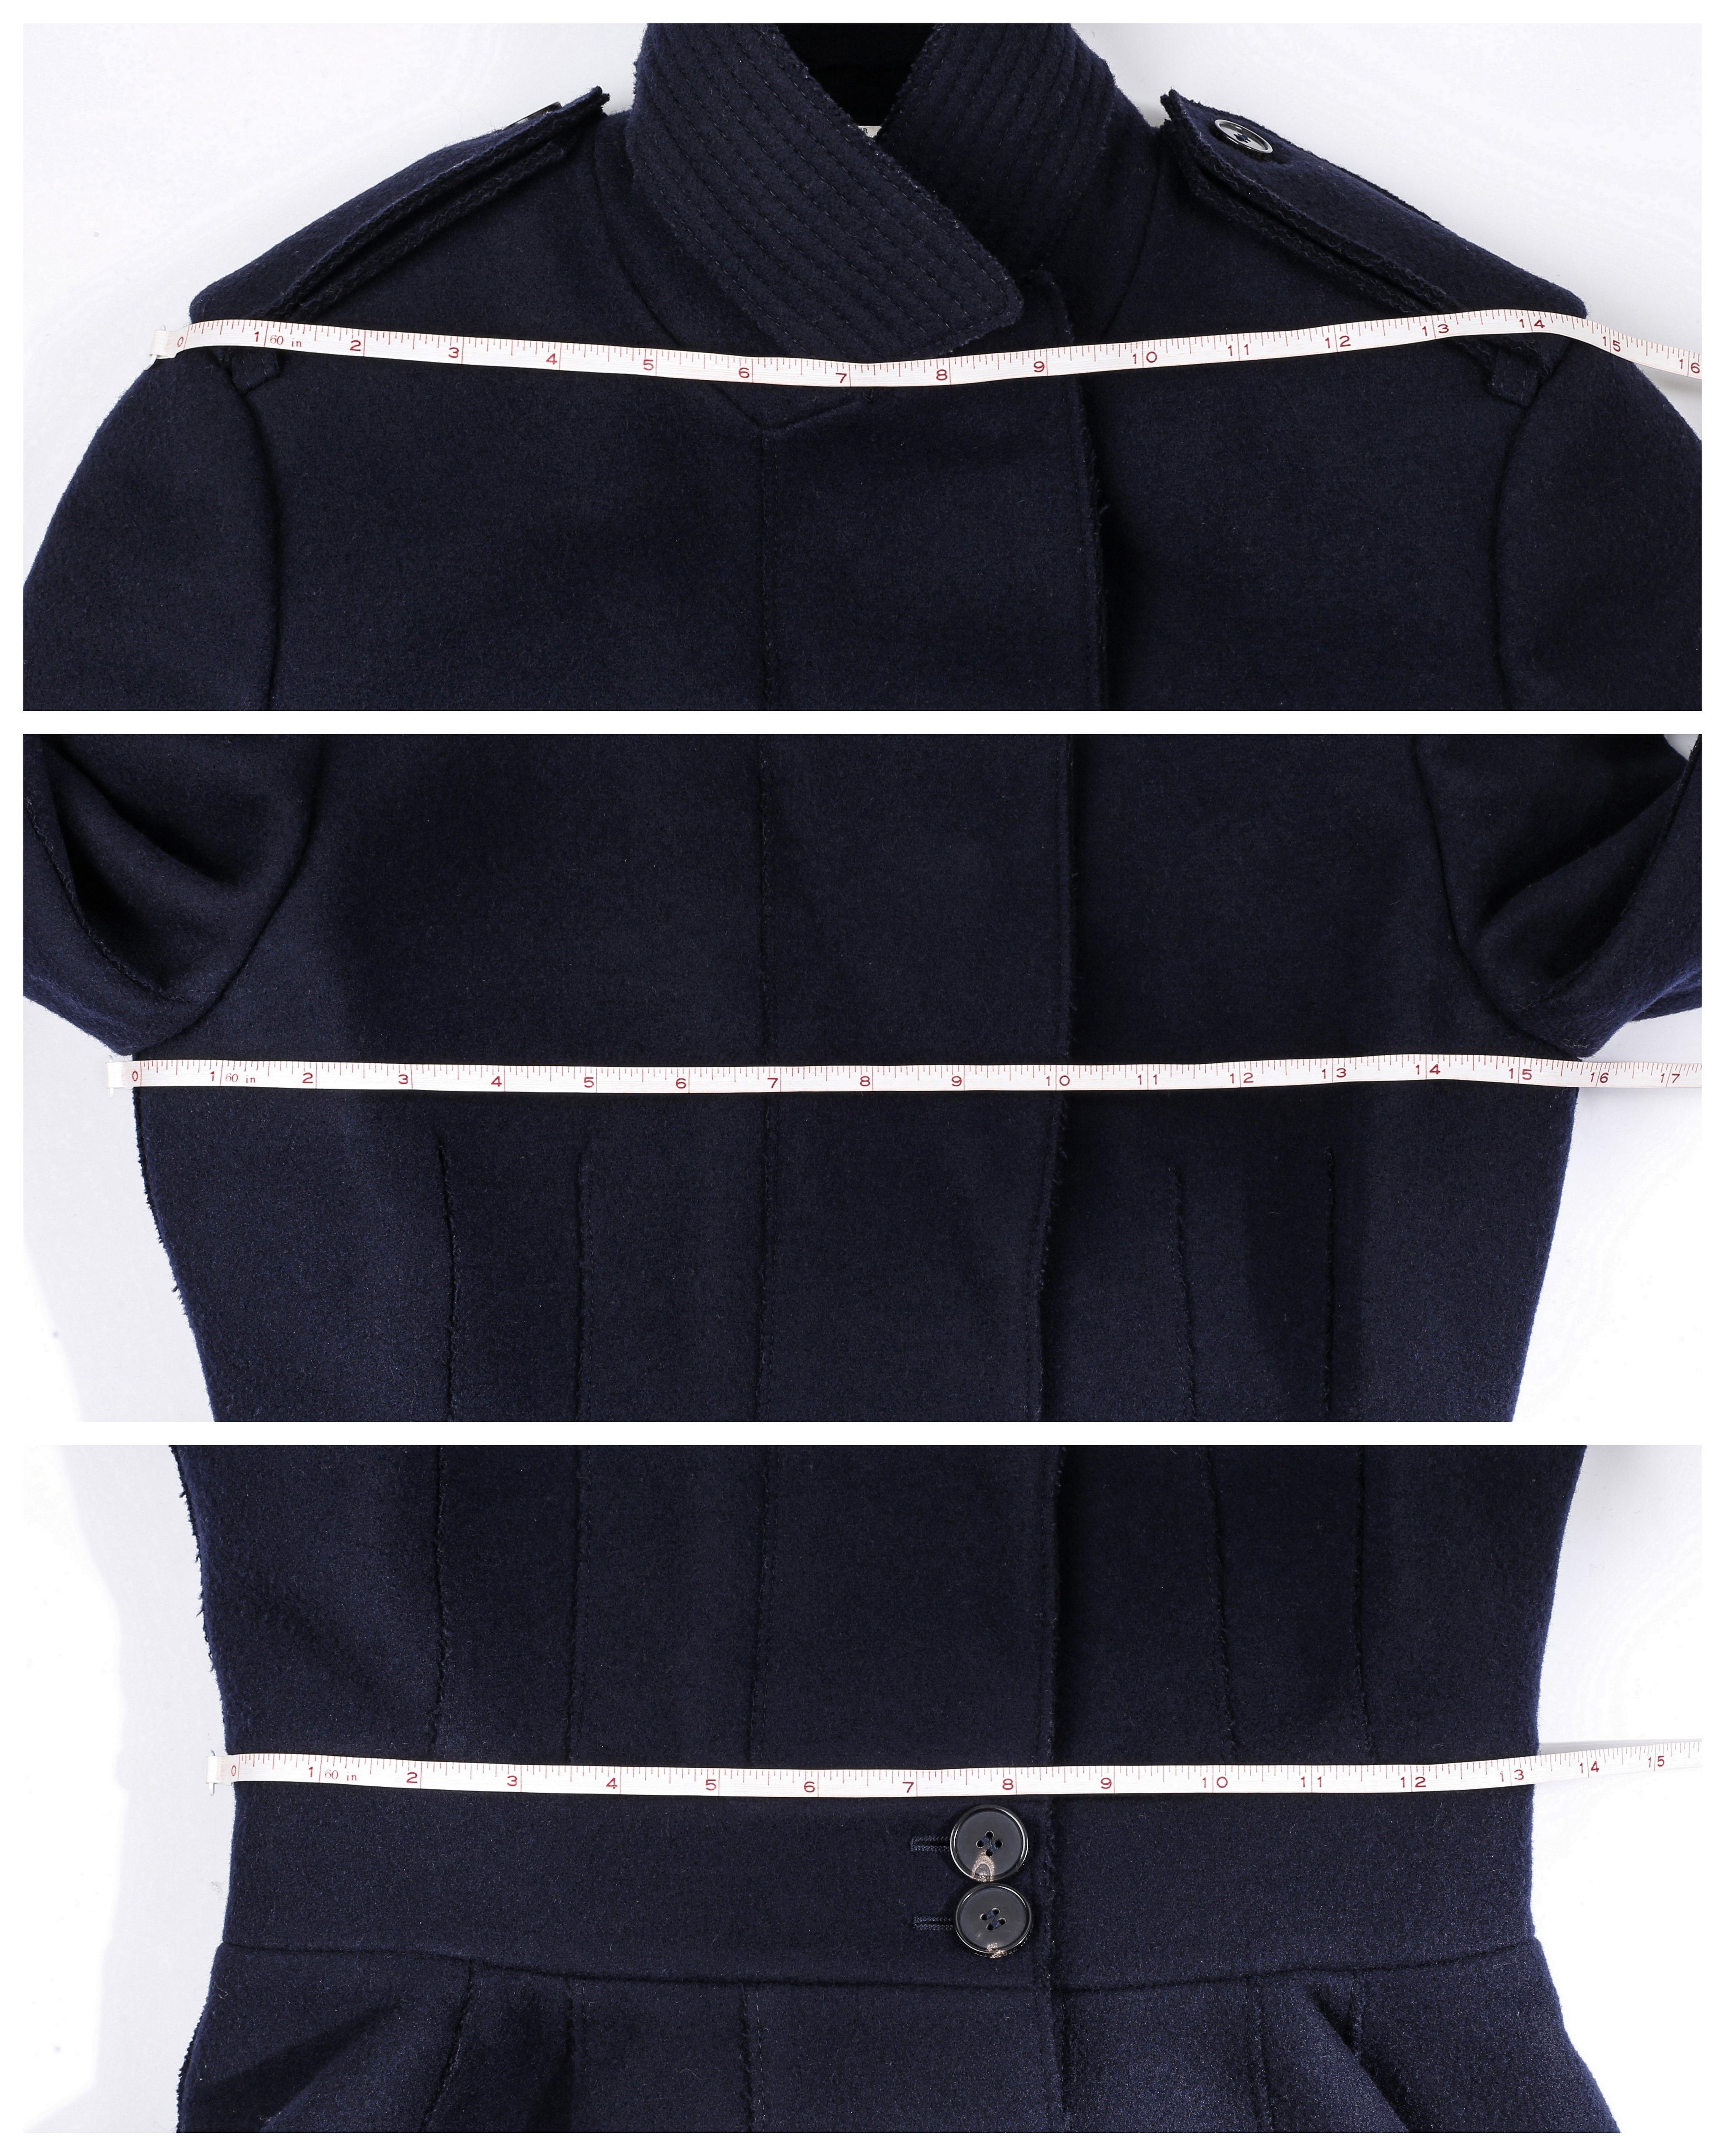 Alexander McQueen Pre-Fall 2015 Navy Wool Peplum Military Style Blazer Jacket For Sale 2